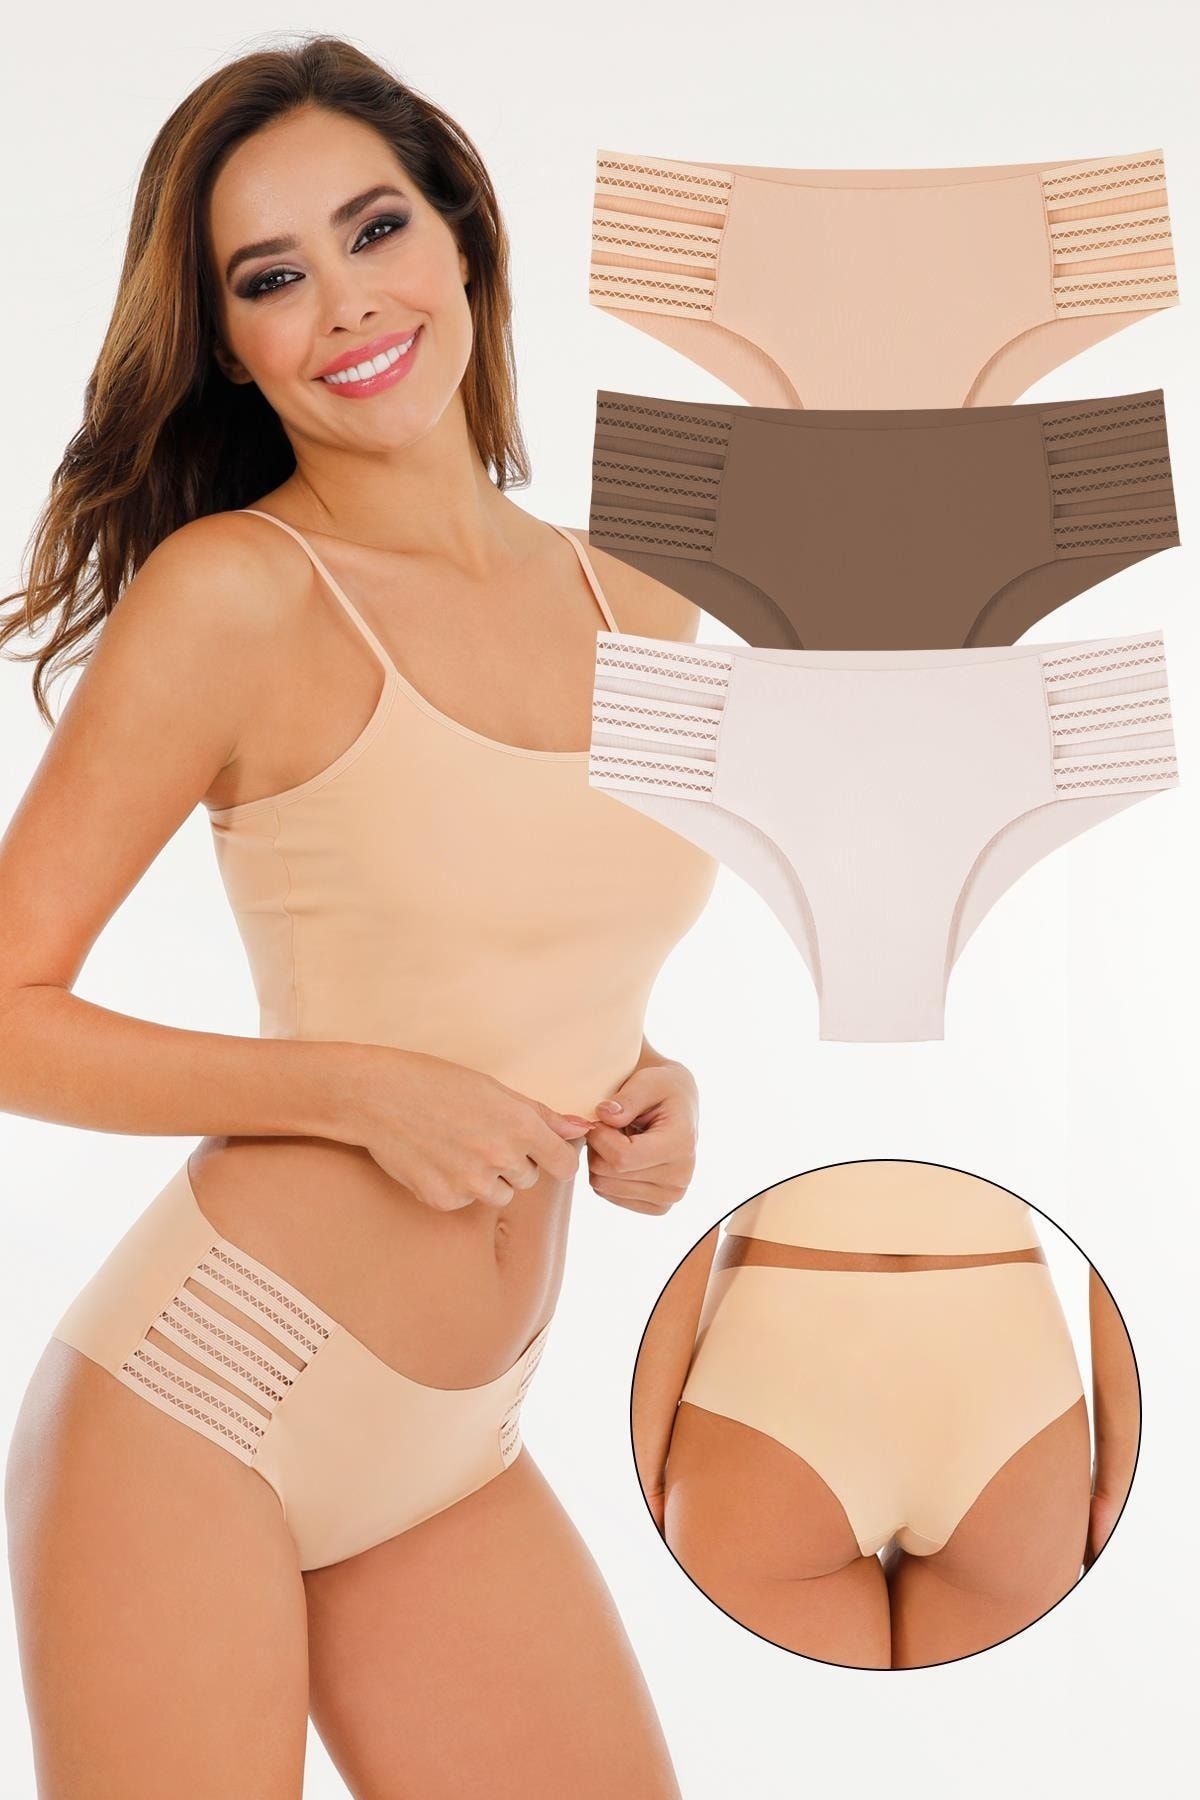 Leonisa 3-Pack Cotton Blend Bikini Panties - Multicolored S